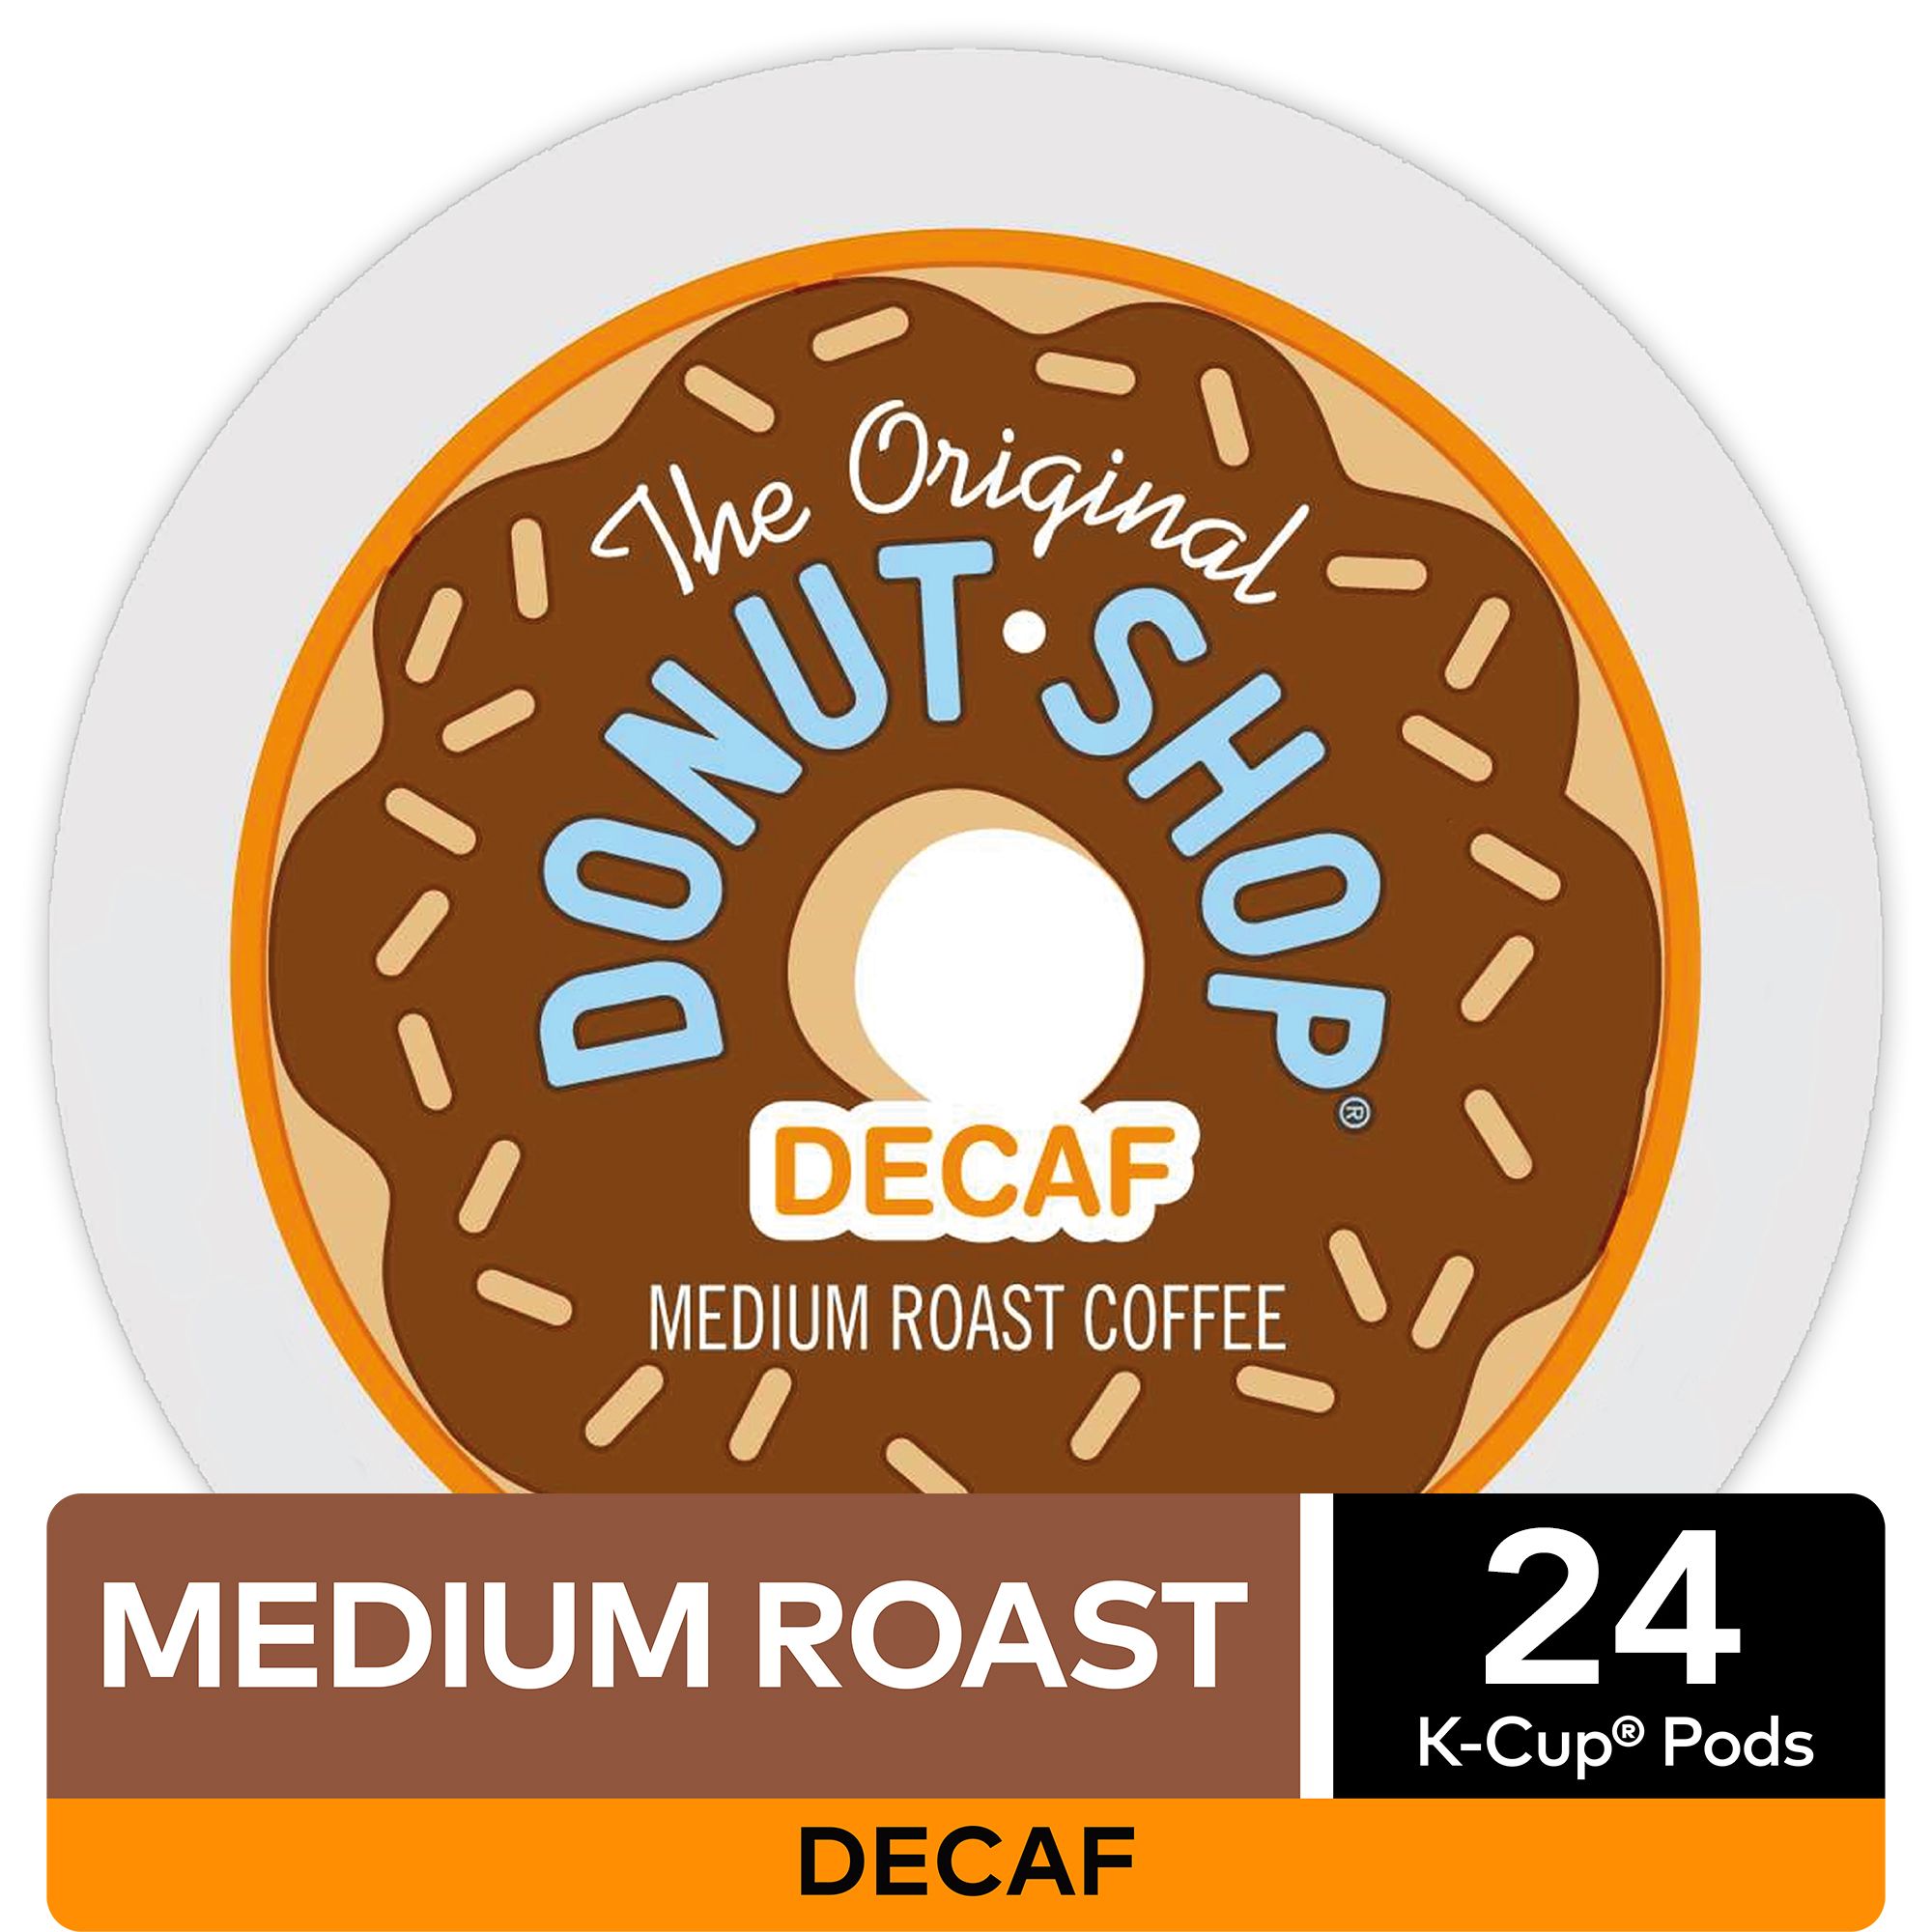 The Original Donut Shop Decaf K